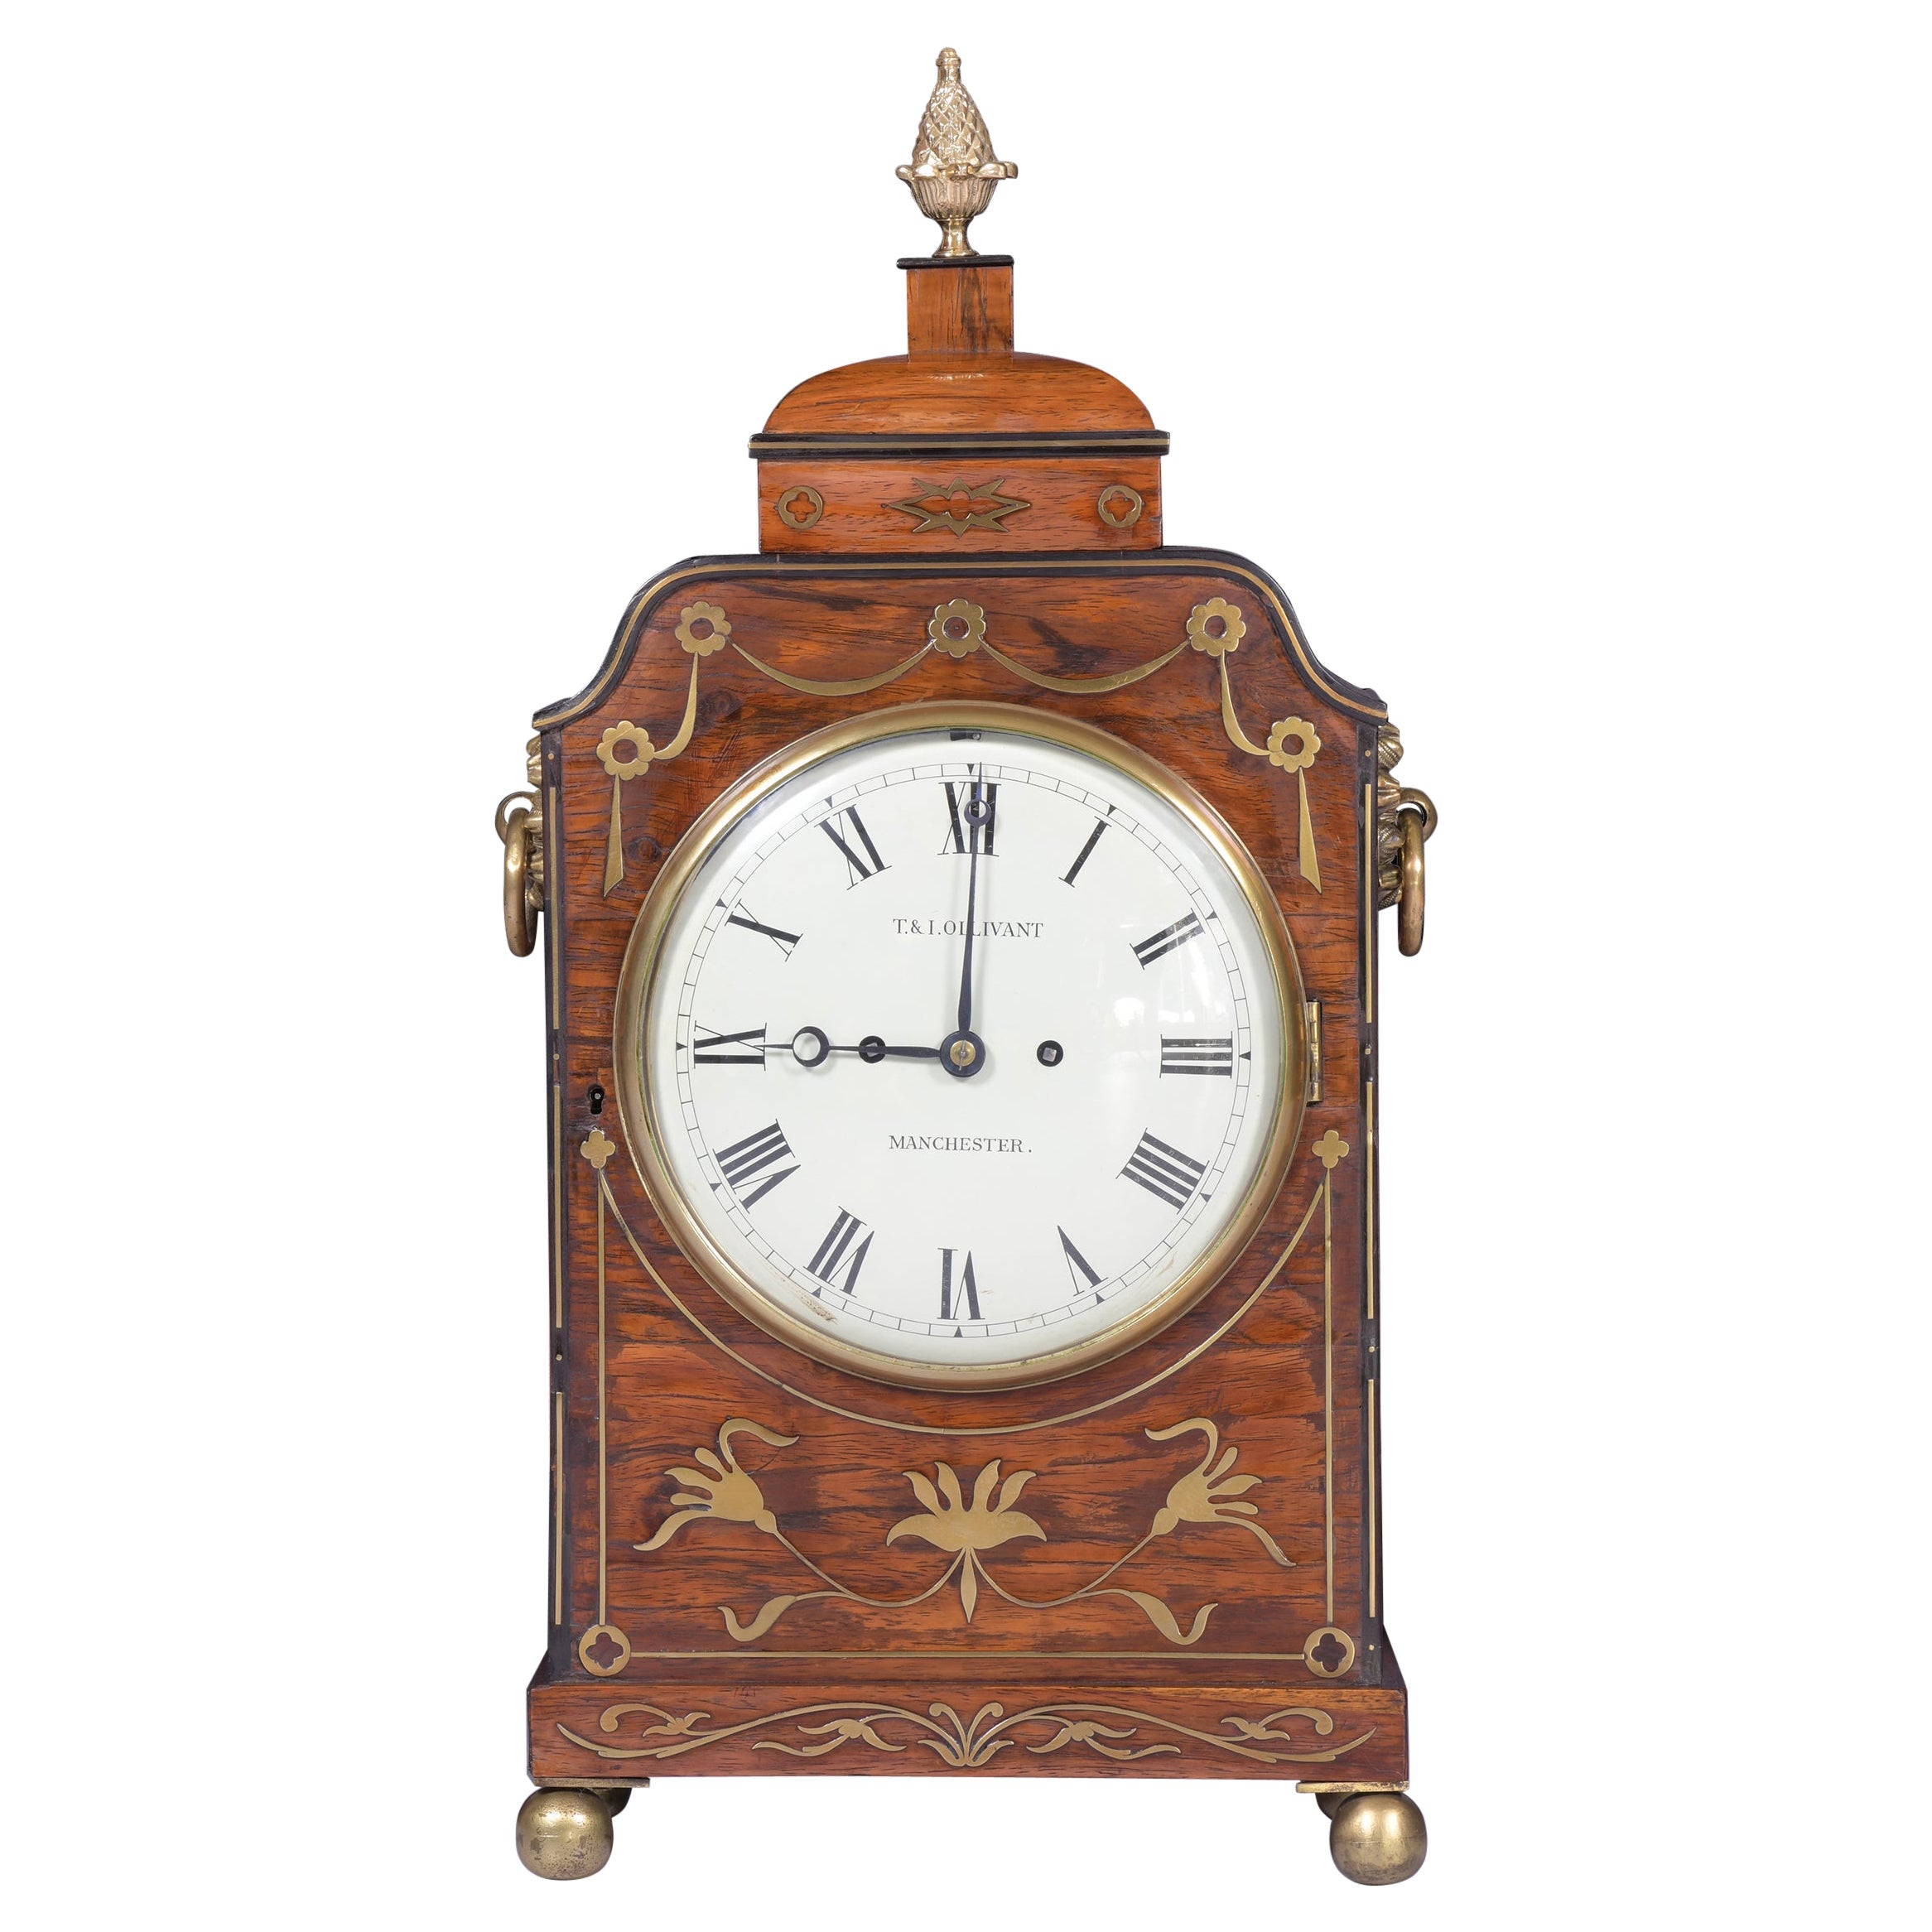 Early 19th Century English Regency Bracket Clock by T. & J. Ollivant